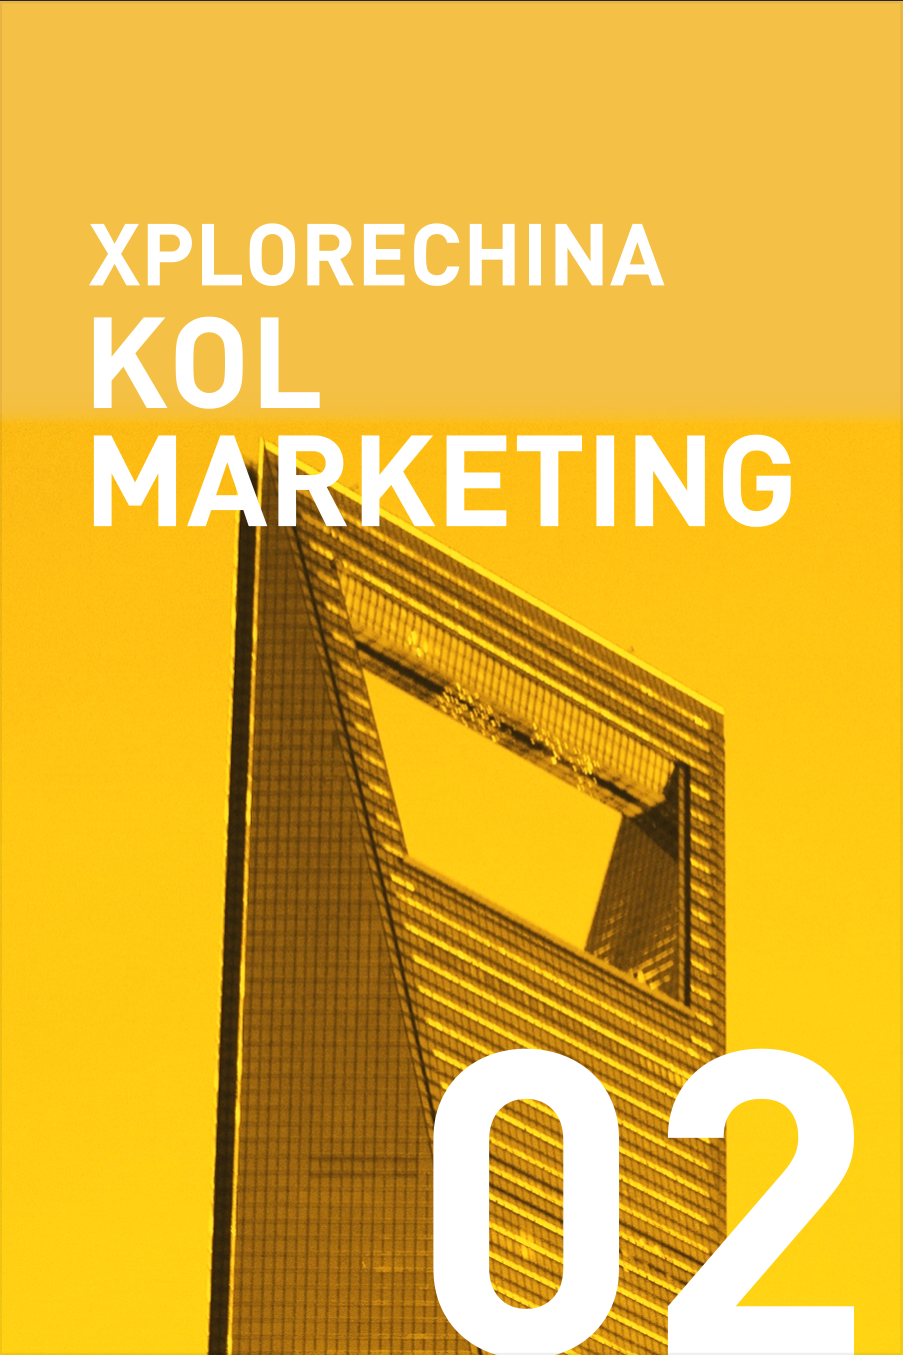 XploreChina: Your Gateway To China’s Mobile Market